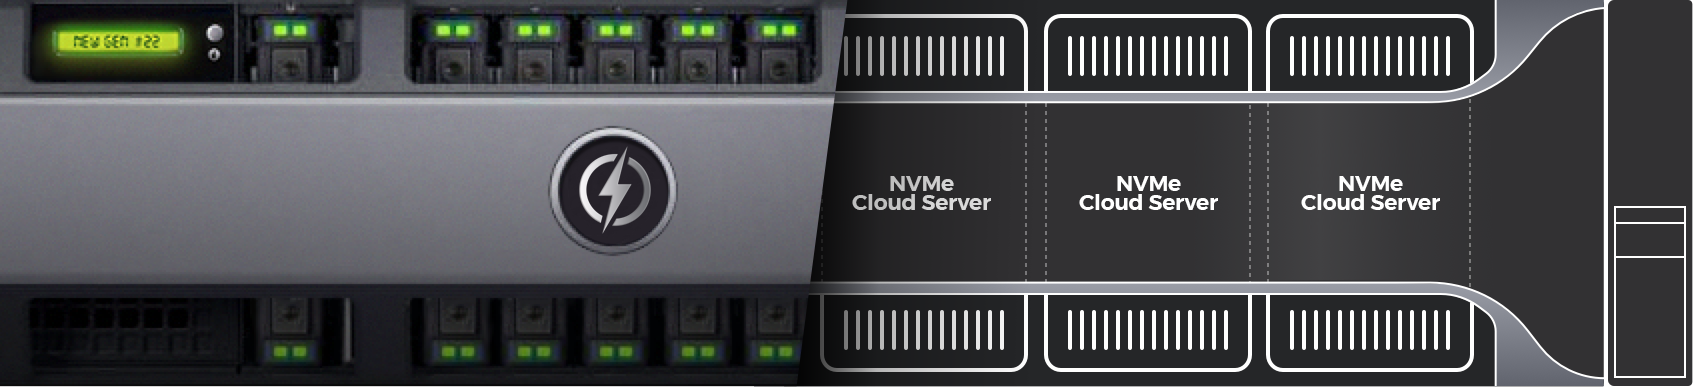 nvme cloud server